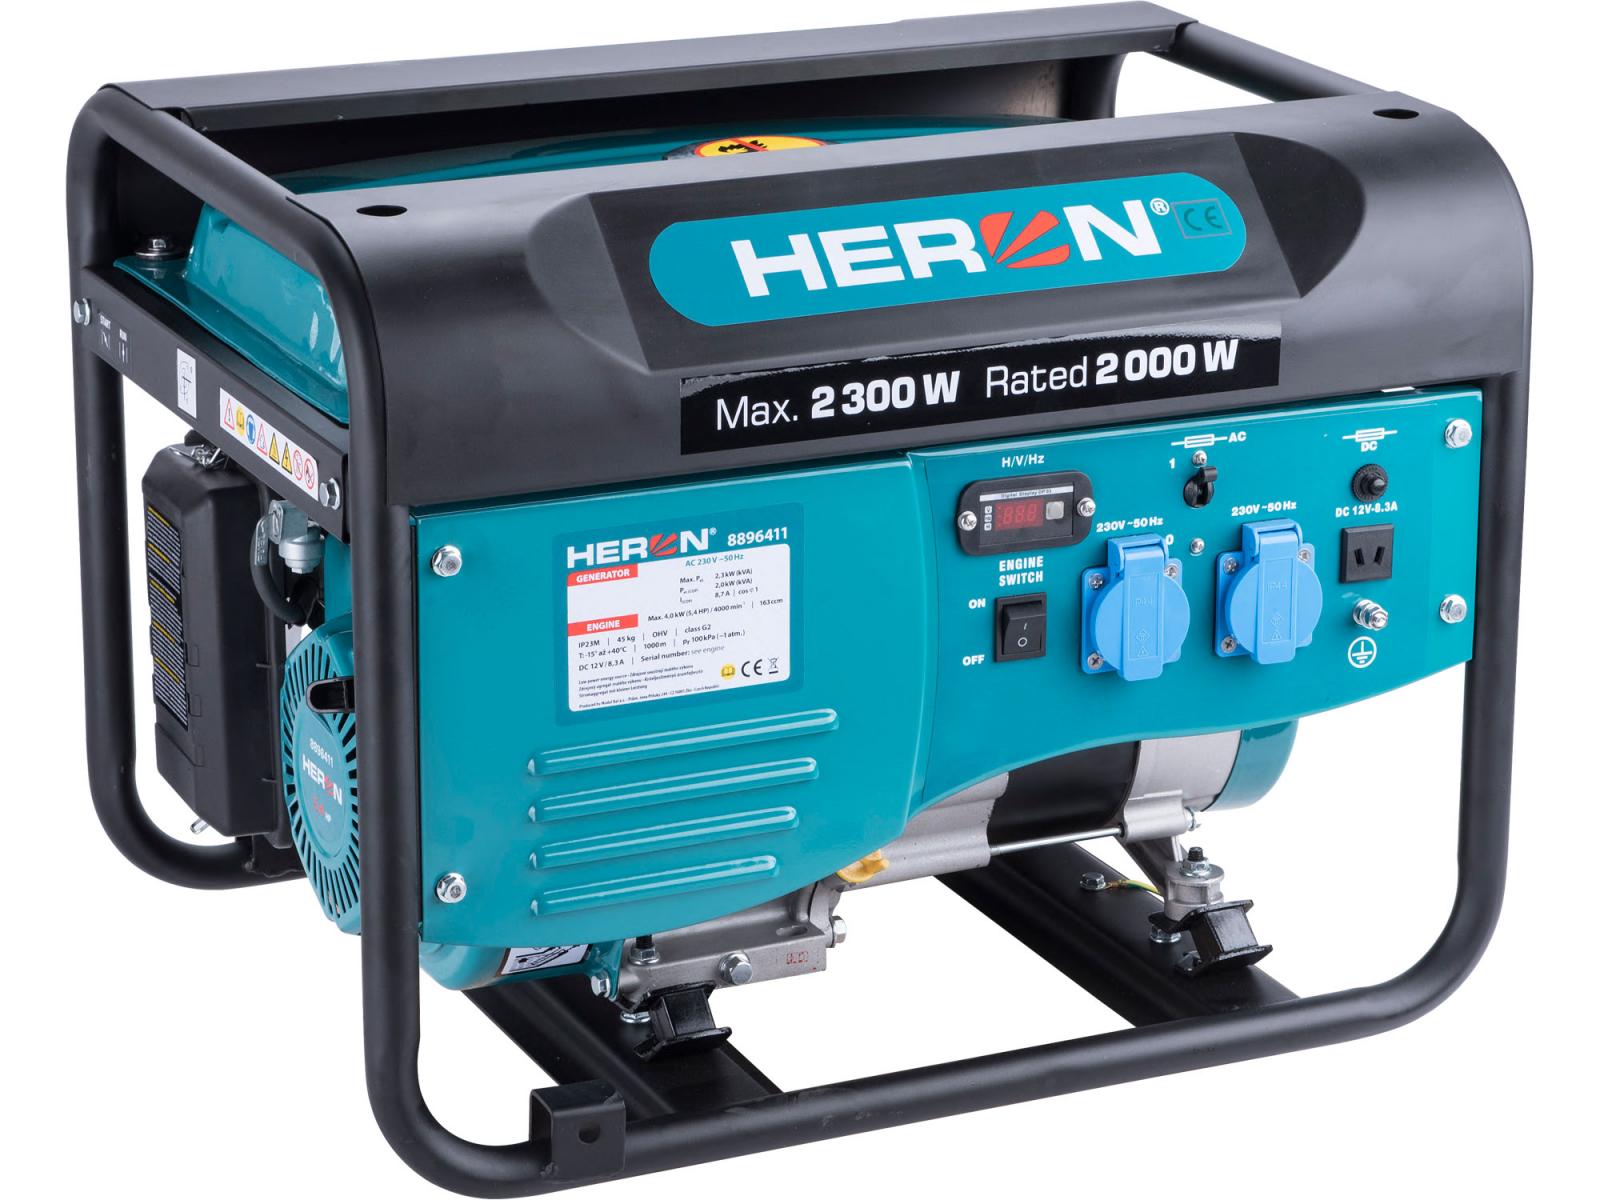 HERON benzínová eletrocentrála 2,3Kw 8896411